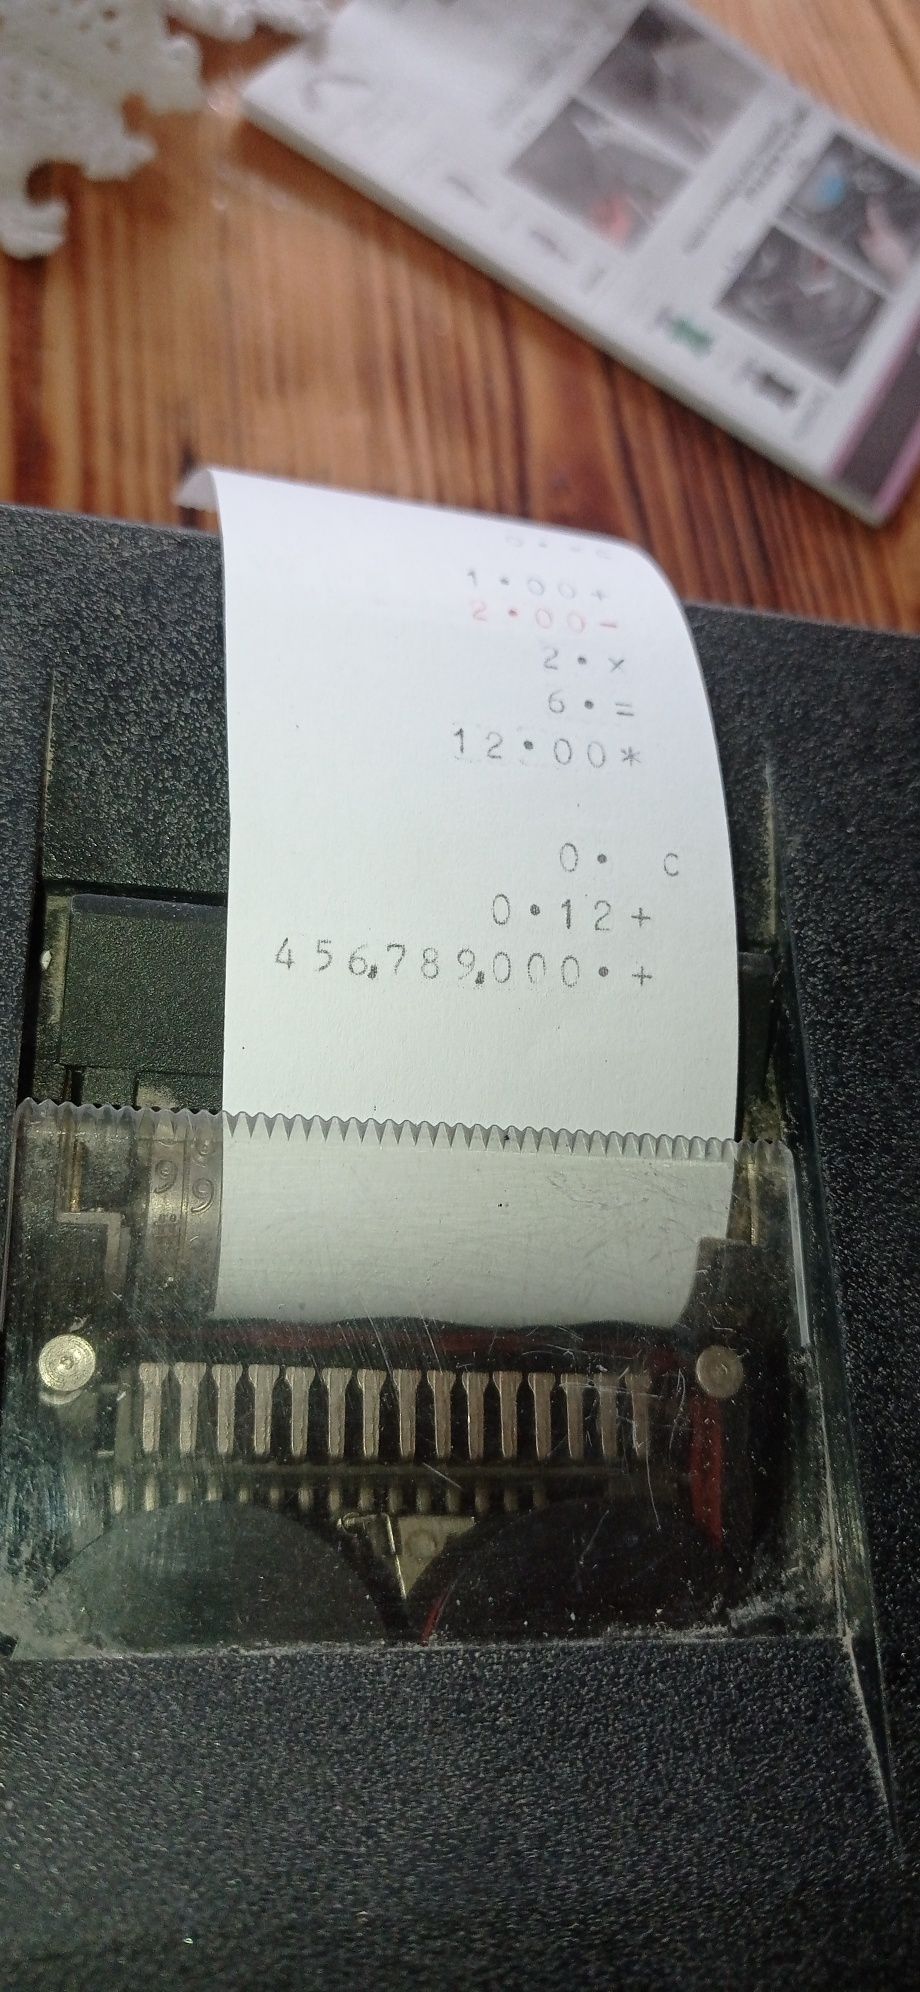 Calculator cu imprimare MBO TRS1550 PD